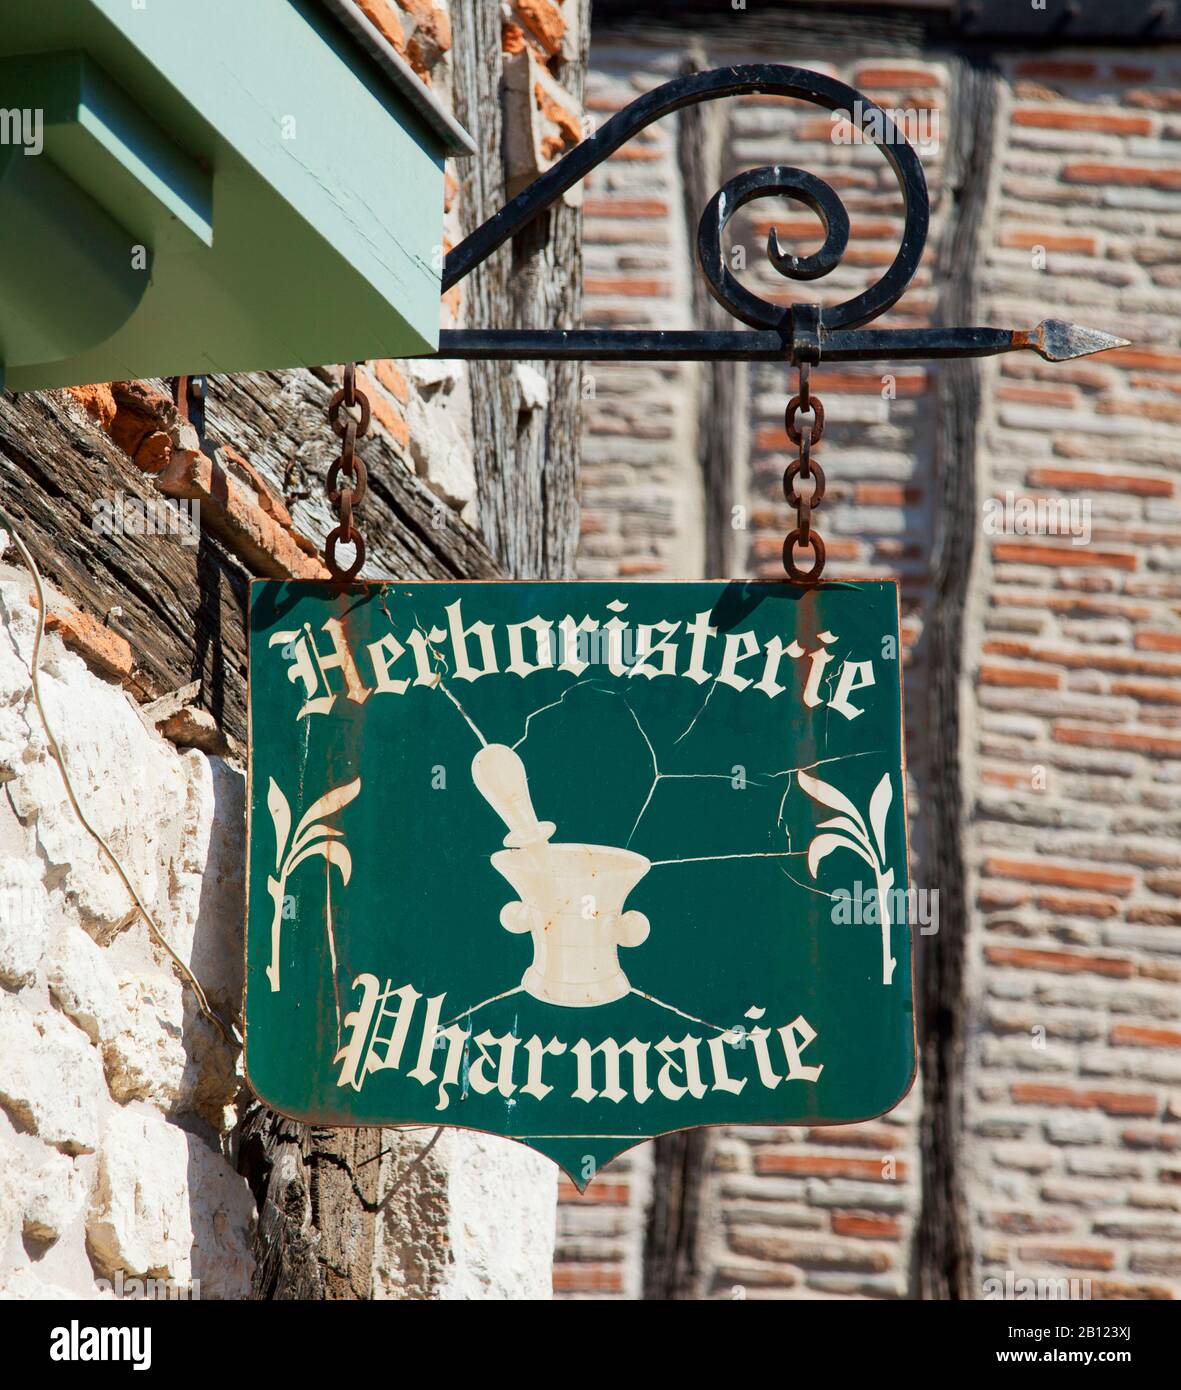 Pharmacie sign, Castelnau de Montmiral, Tarn, Midi Pyrenees region, France, Europe Stock Photo